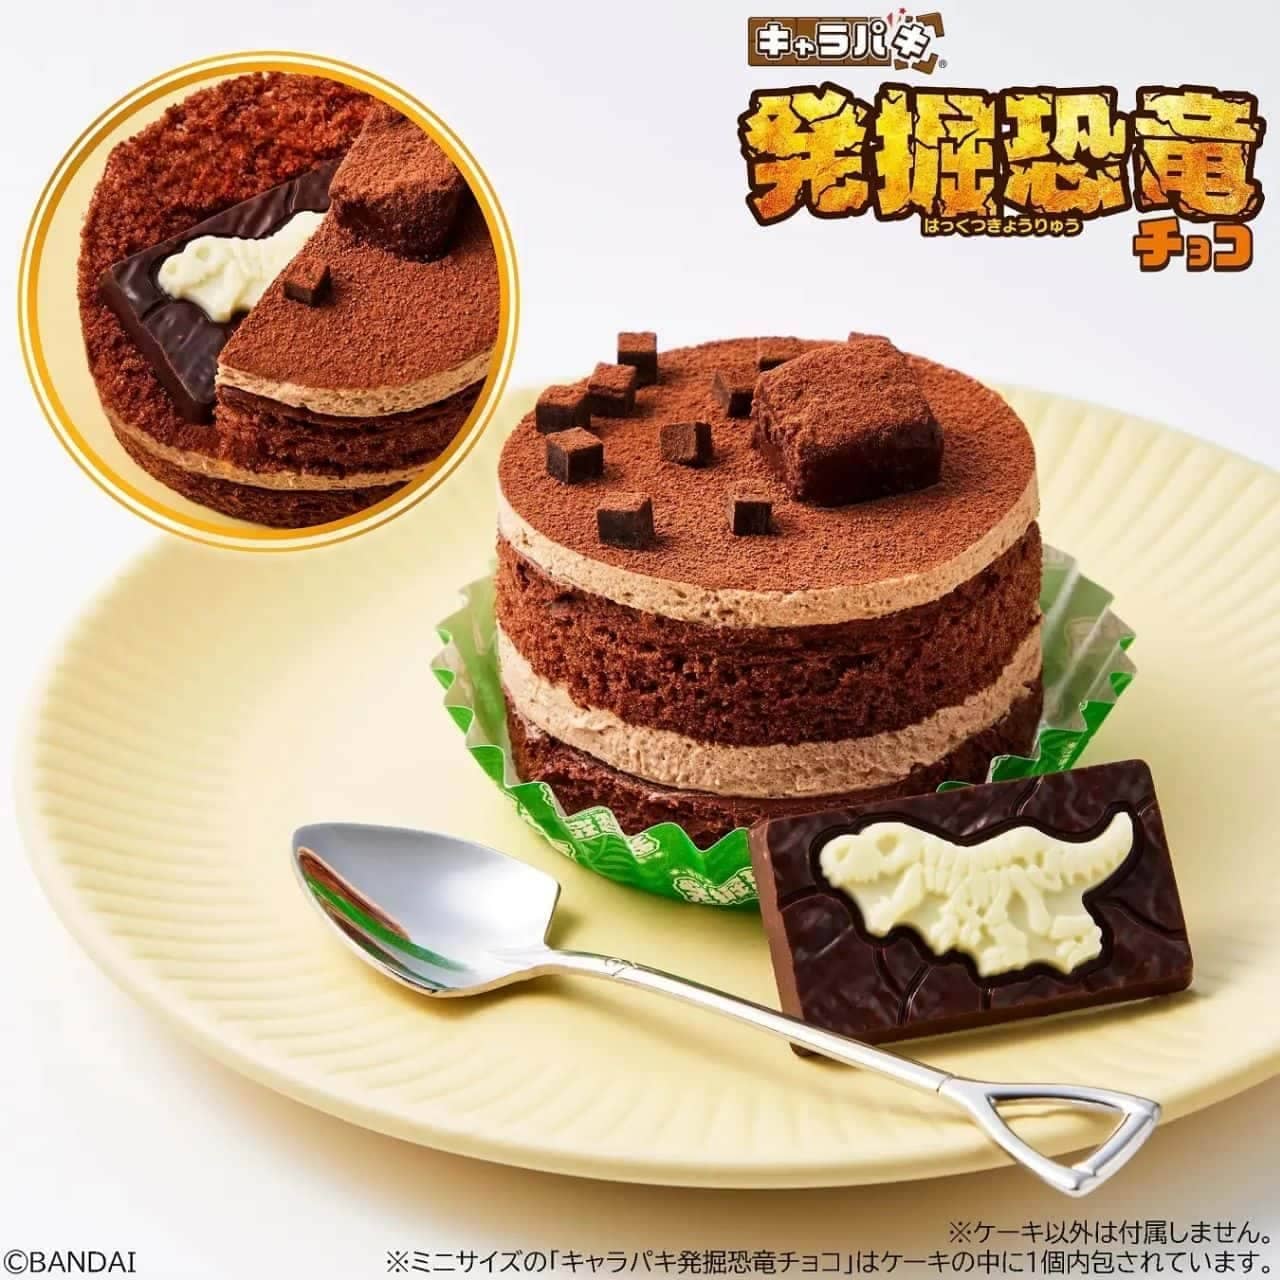 Fujiya Confectionery Shop's "Chalapaki Excavated Dinosaur Chocolate" with! Excavation Fun Chocolate Cake